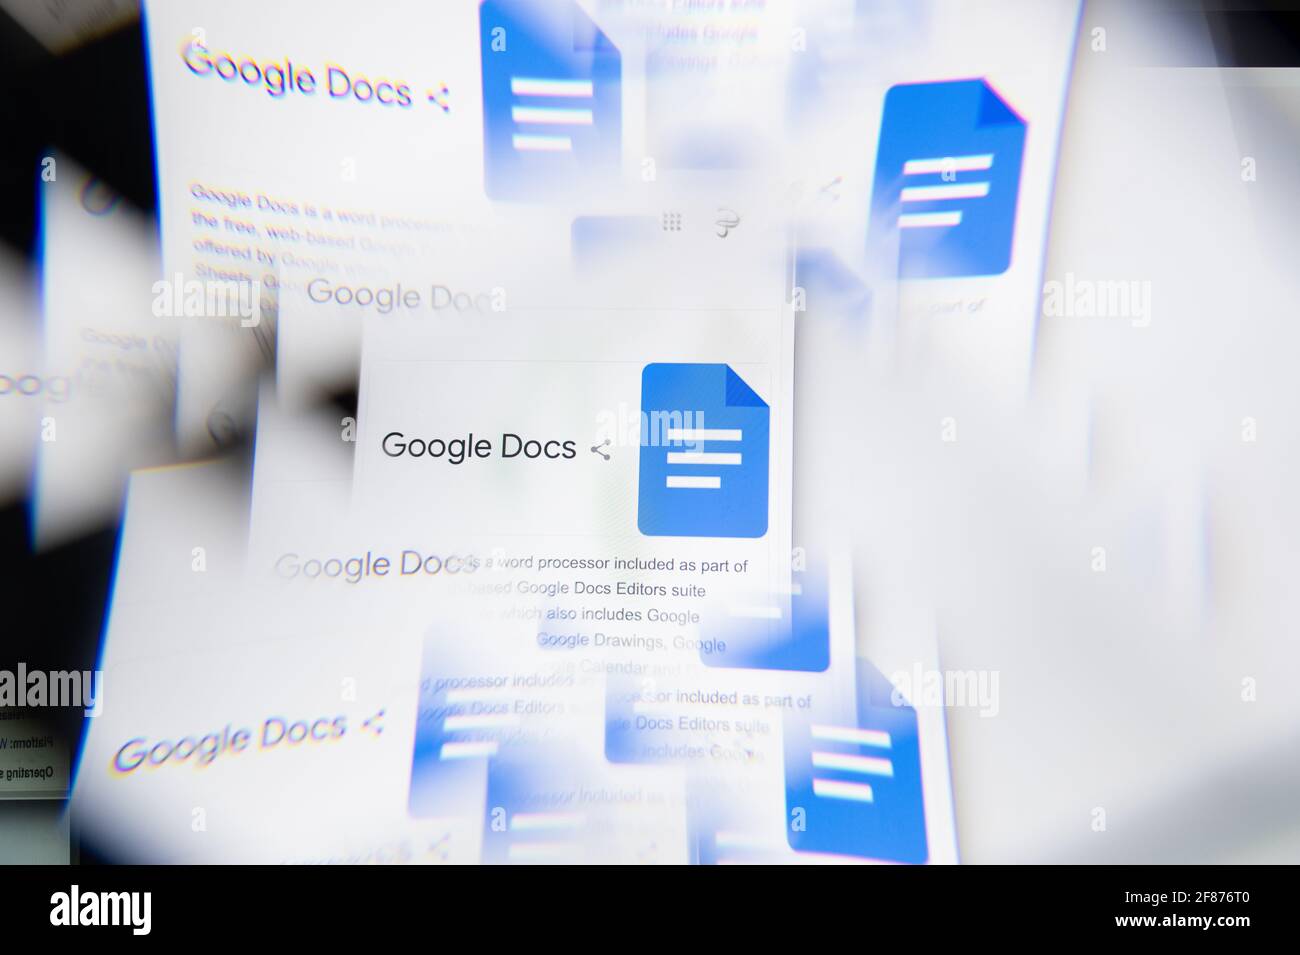 Milan, Italy - APRIL 10, 2021: Google Docs logo on laptop screen seen through an optical prism. Illustrative editorial image from Google Docs website. Stock Photo